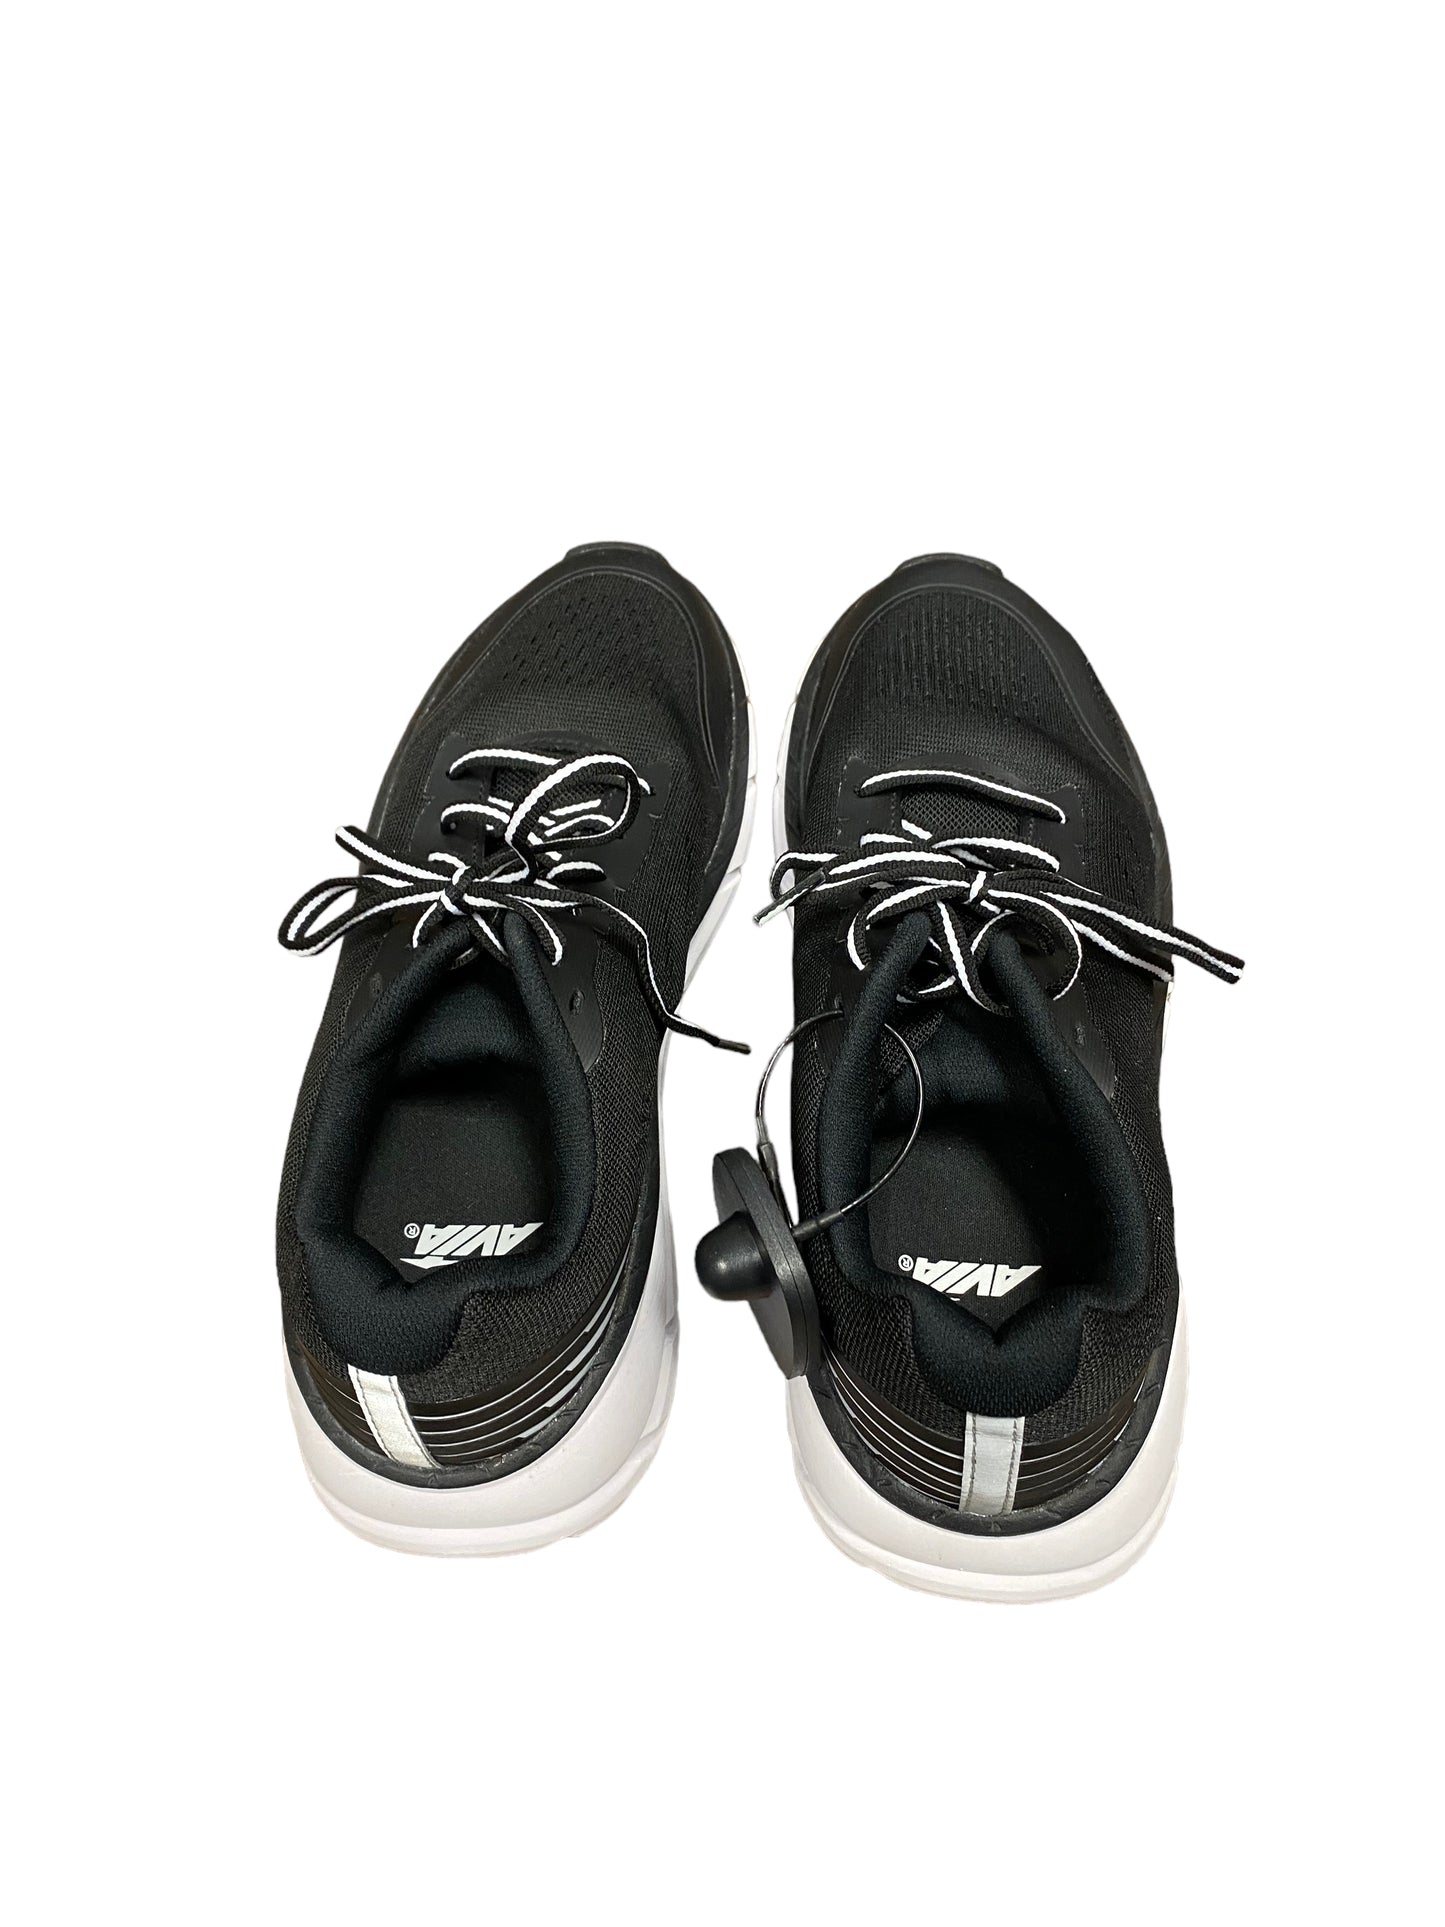 Black Shoes Athletic Avia, Size 7